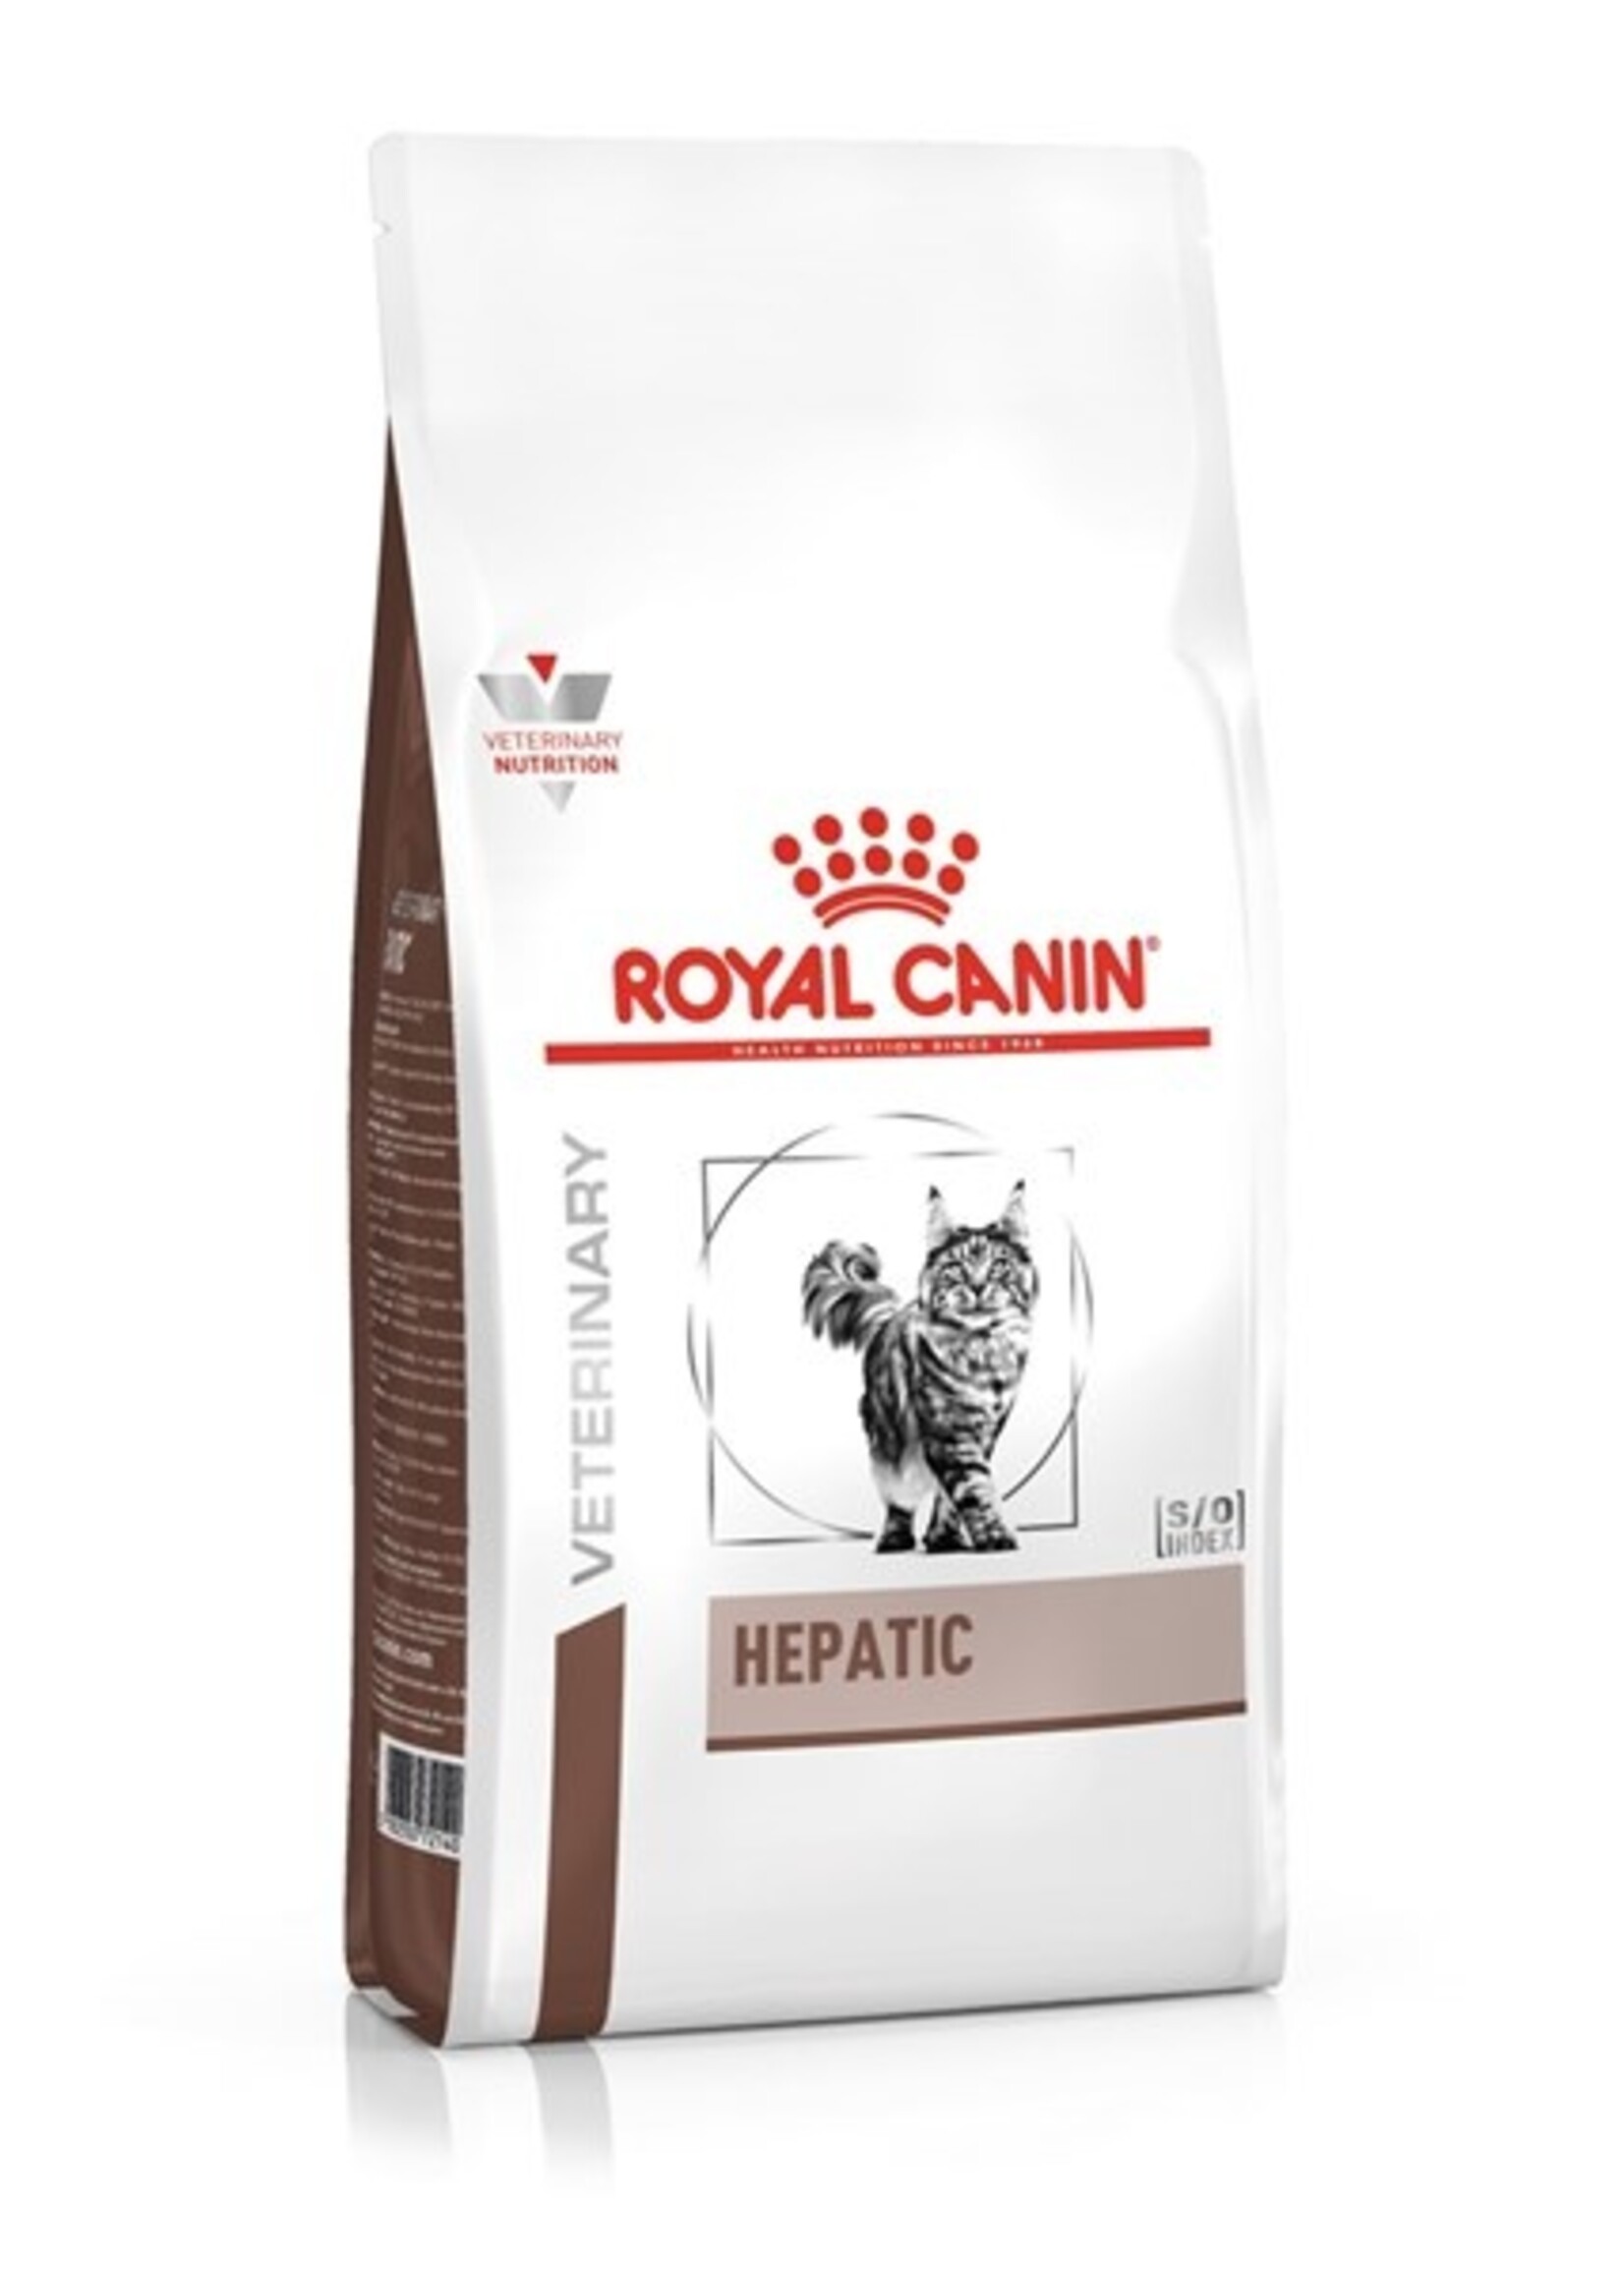 Royal Canin Royal Canin Vdiet Hepatic Katze 2kg